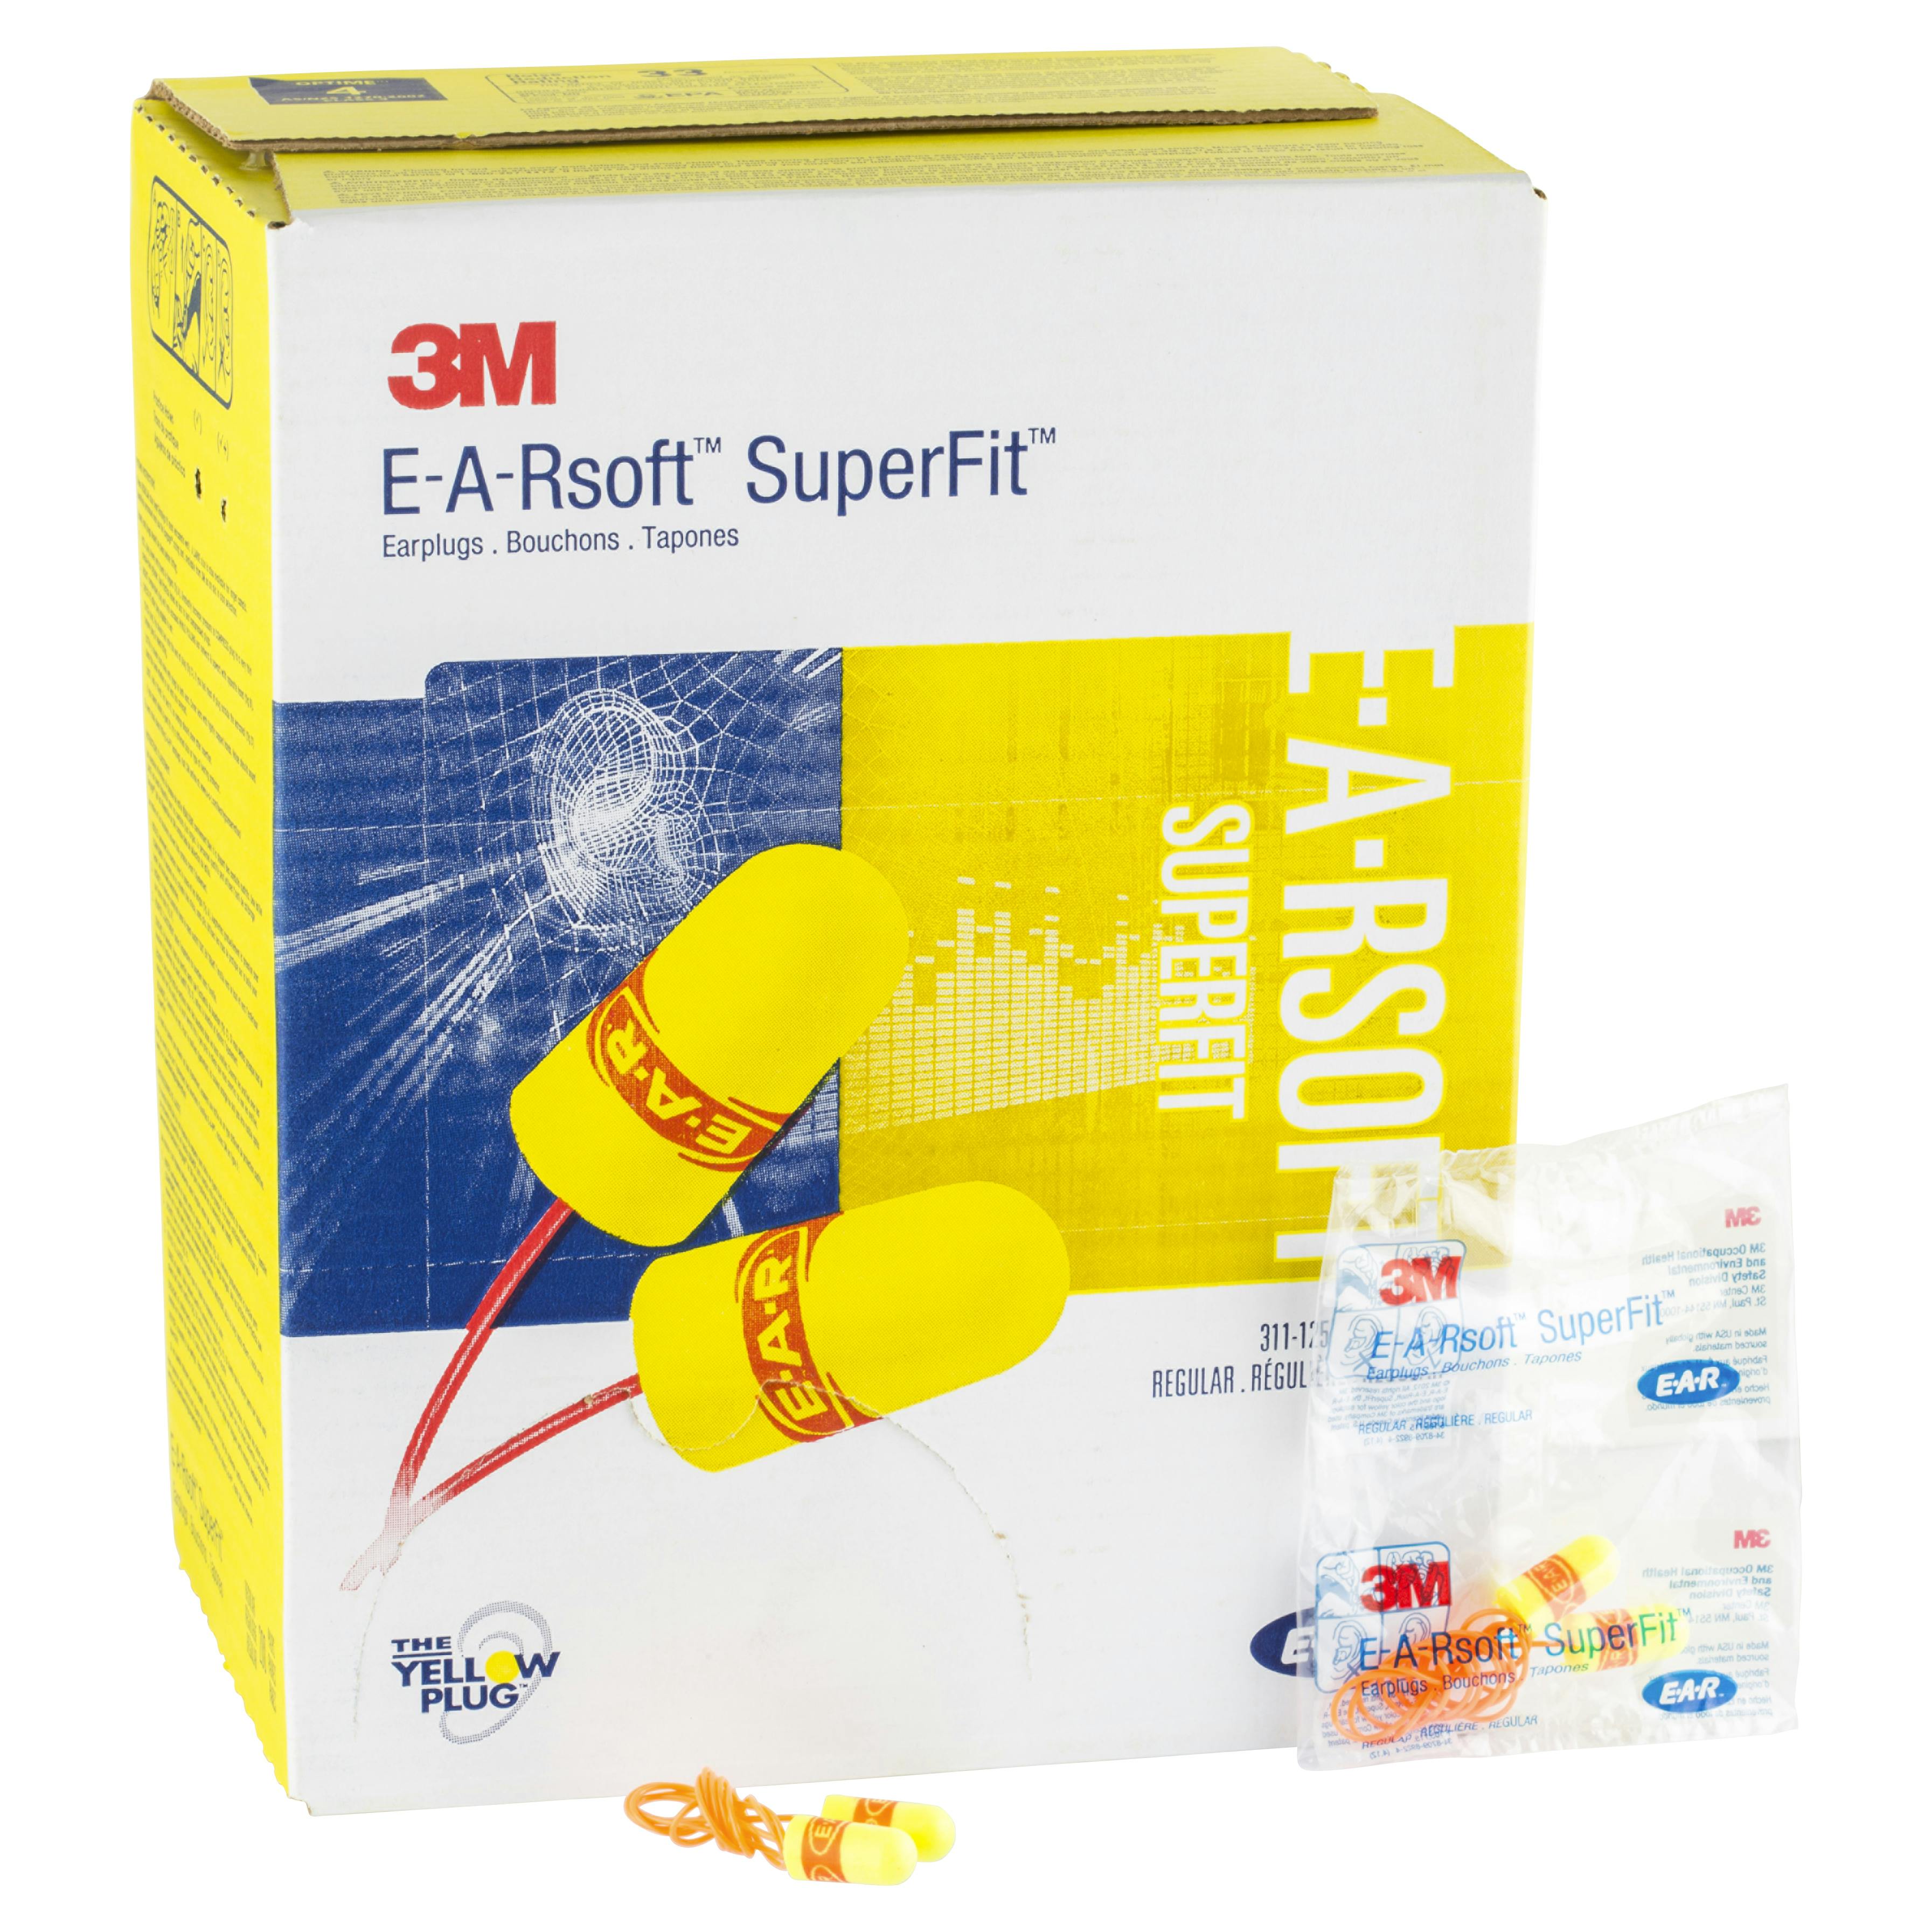 3M™ E-A-Rsoft™ SuperFit™ Corded Earplugs, Poly Bag 311-1254